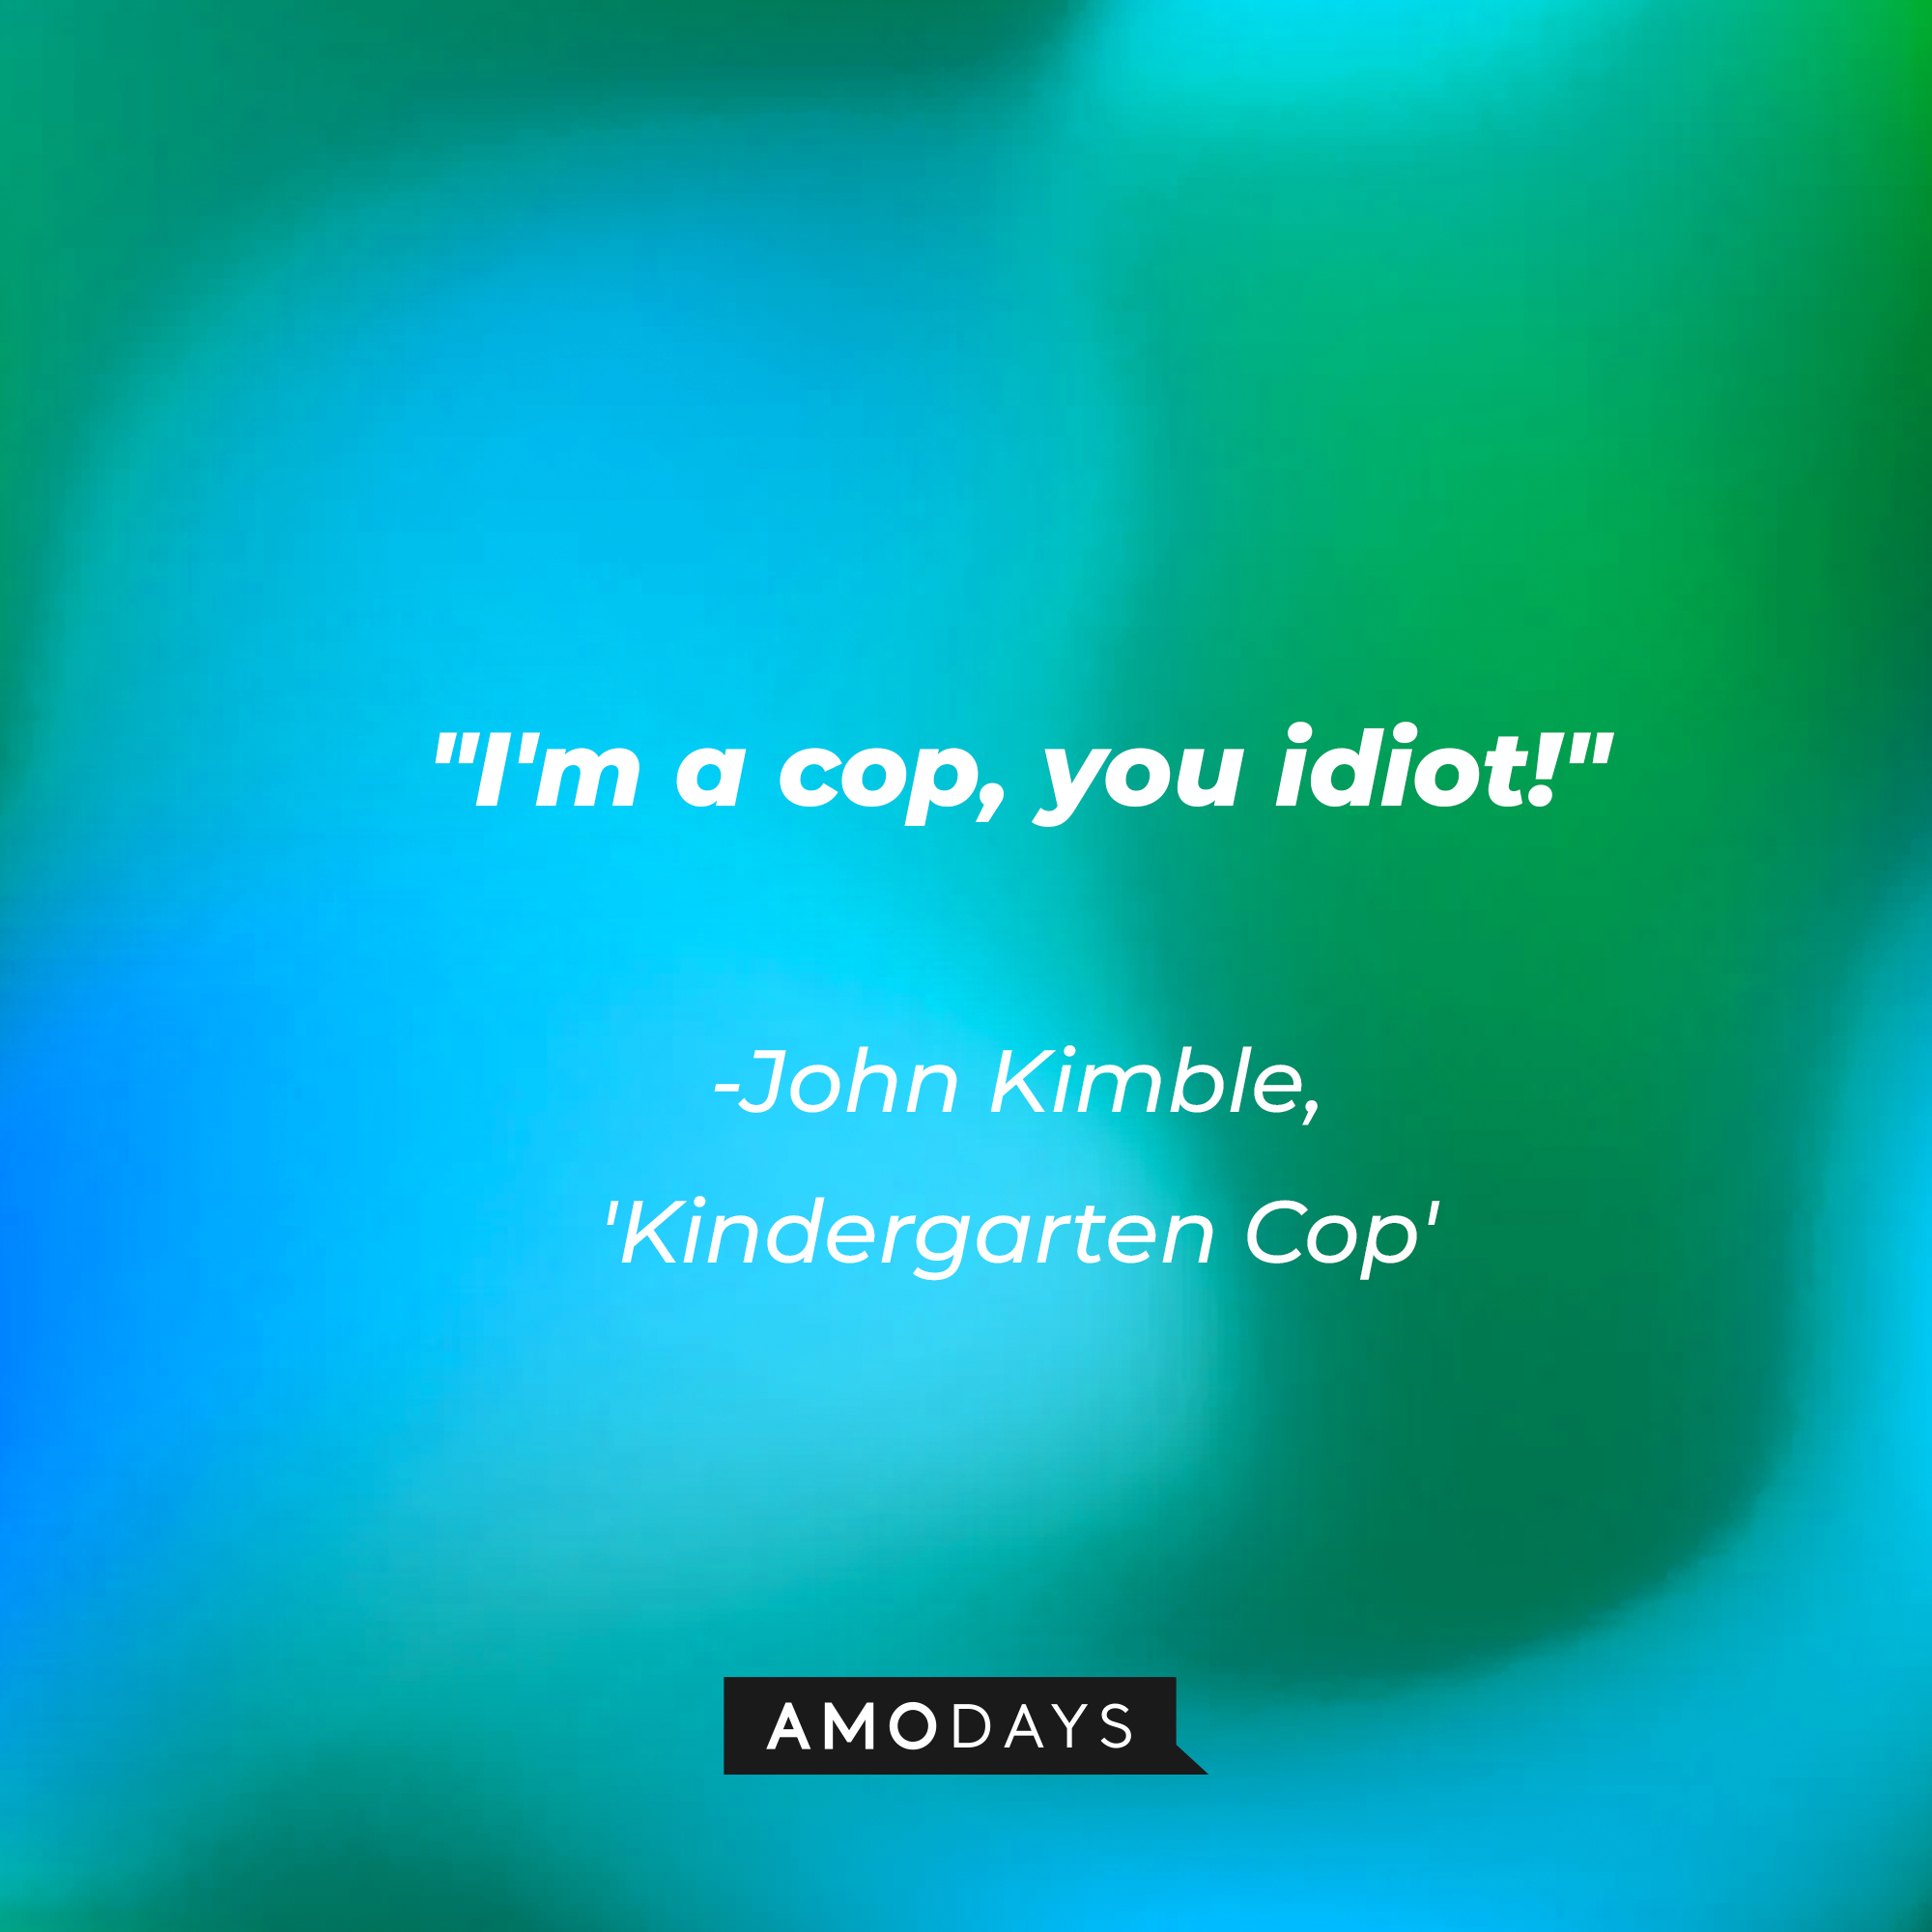 Detective John Kimble's quote in "Kindergarten Cop:" "I'm a cop, you idiot!" | Source: AmoDays